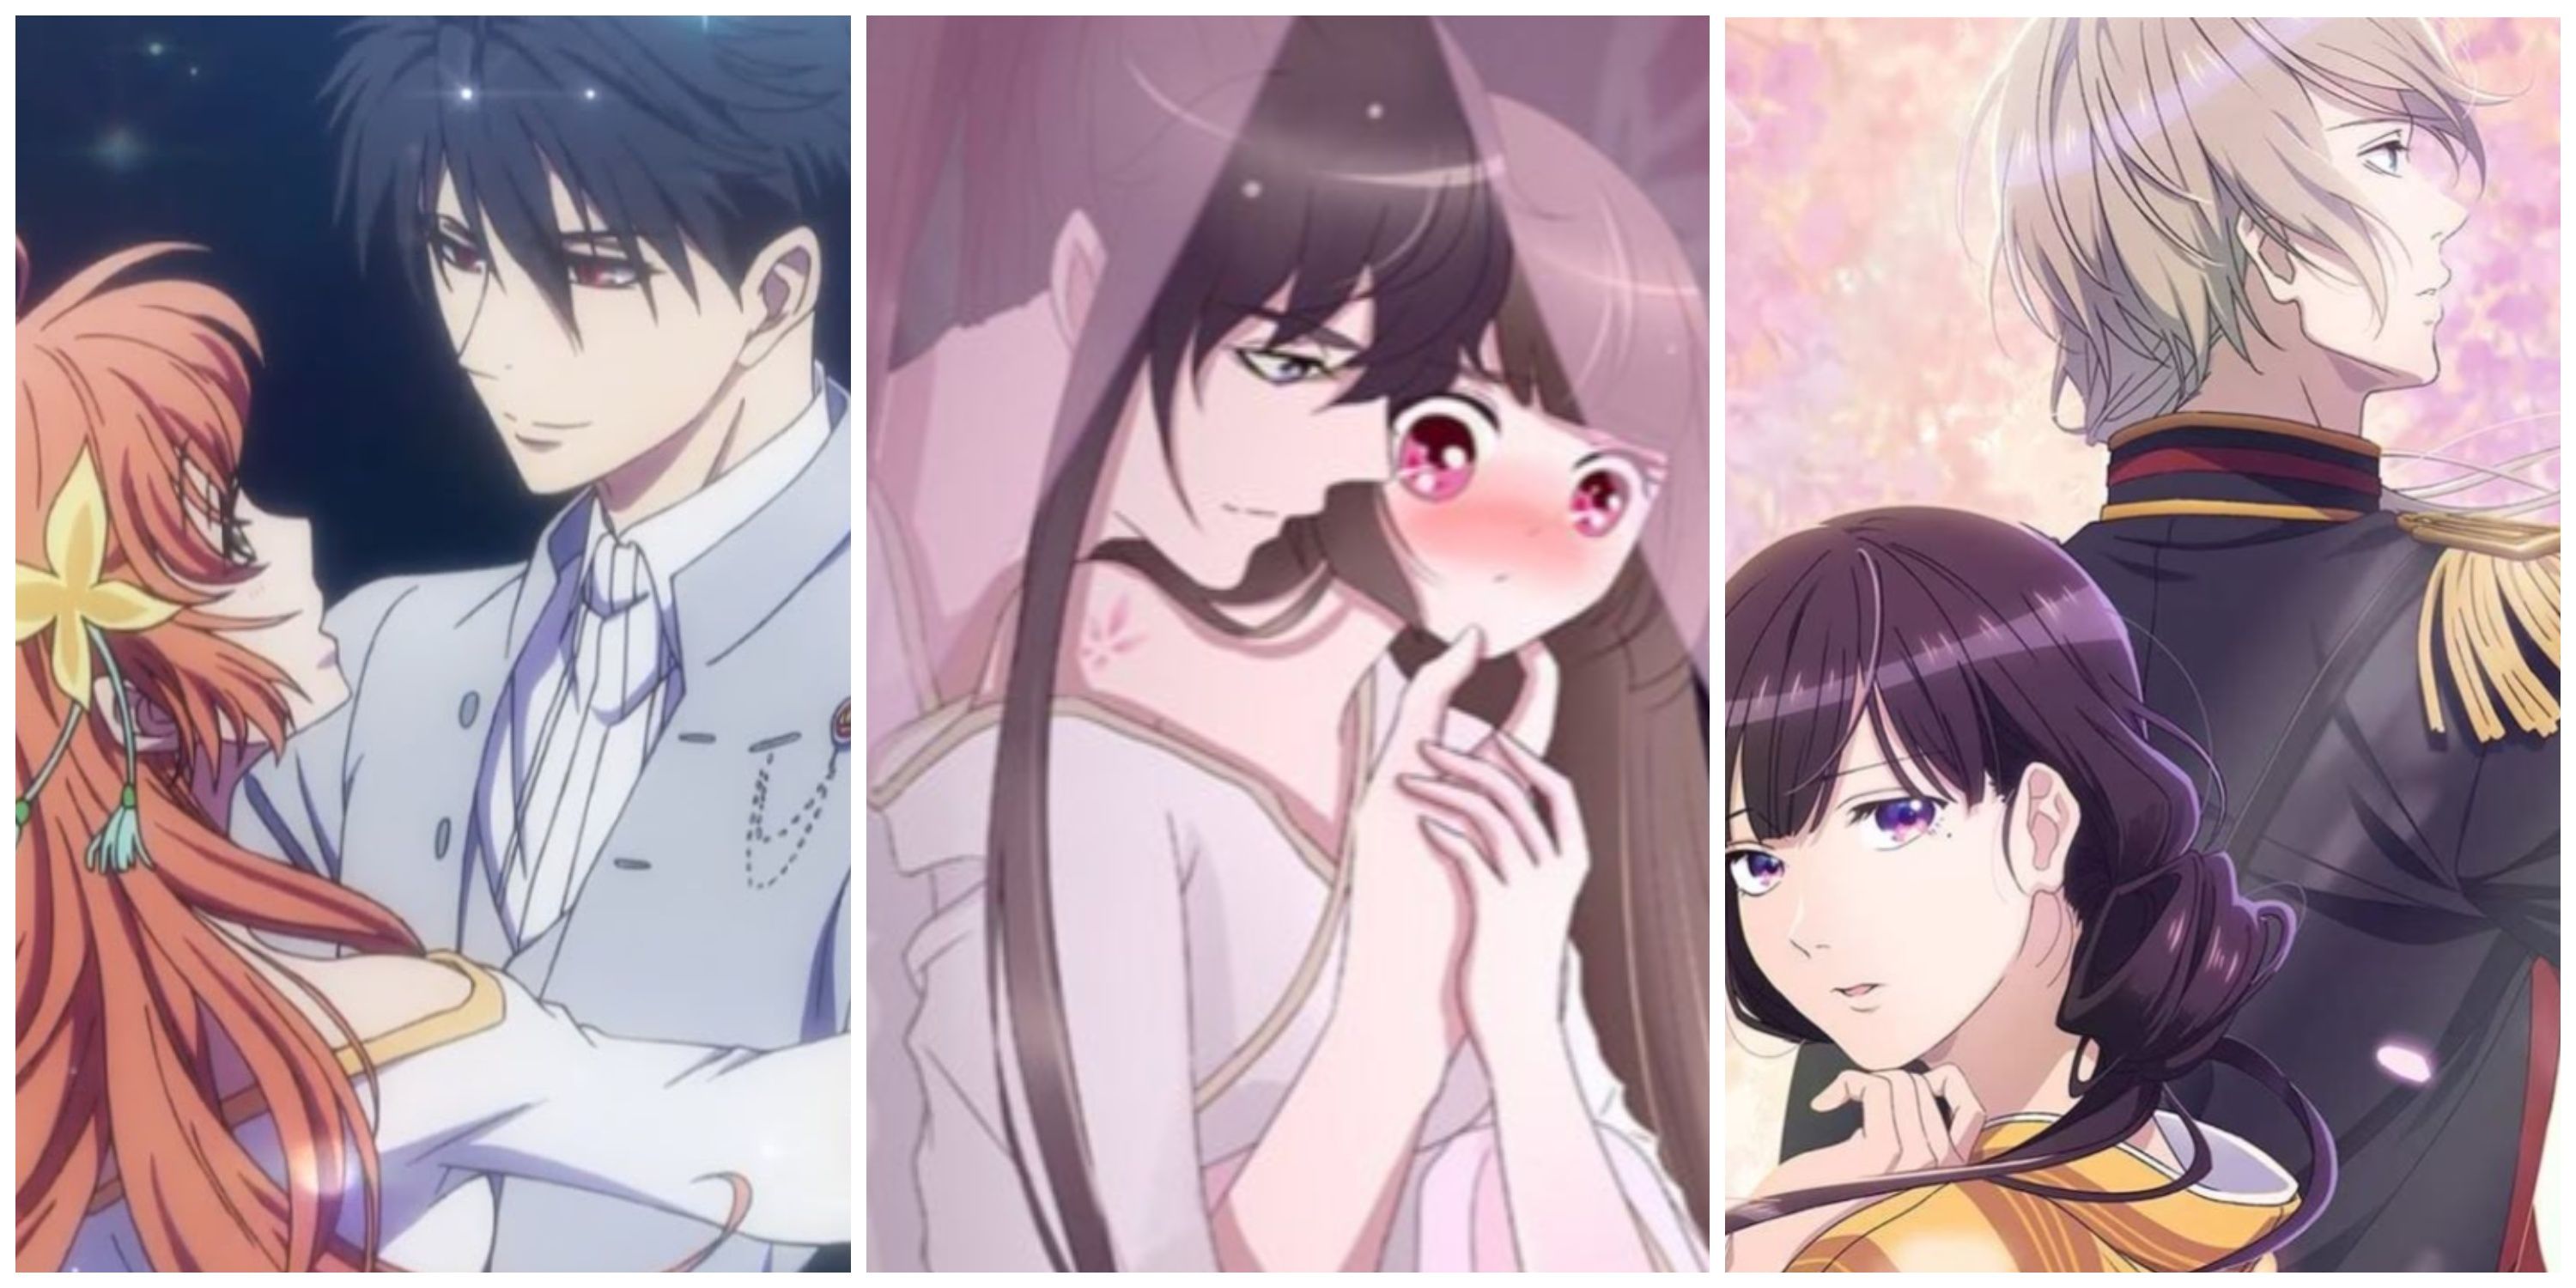 brandon king share english dubbed romance anime photos